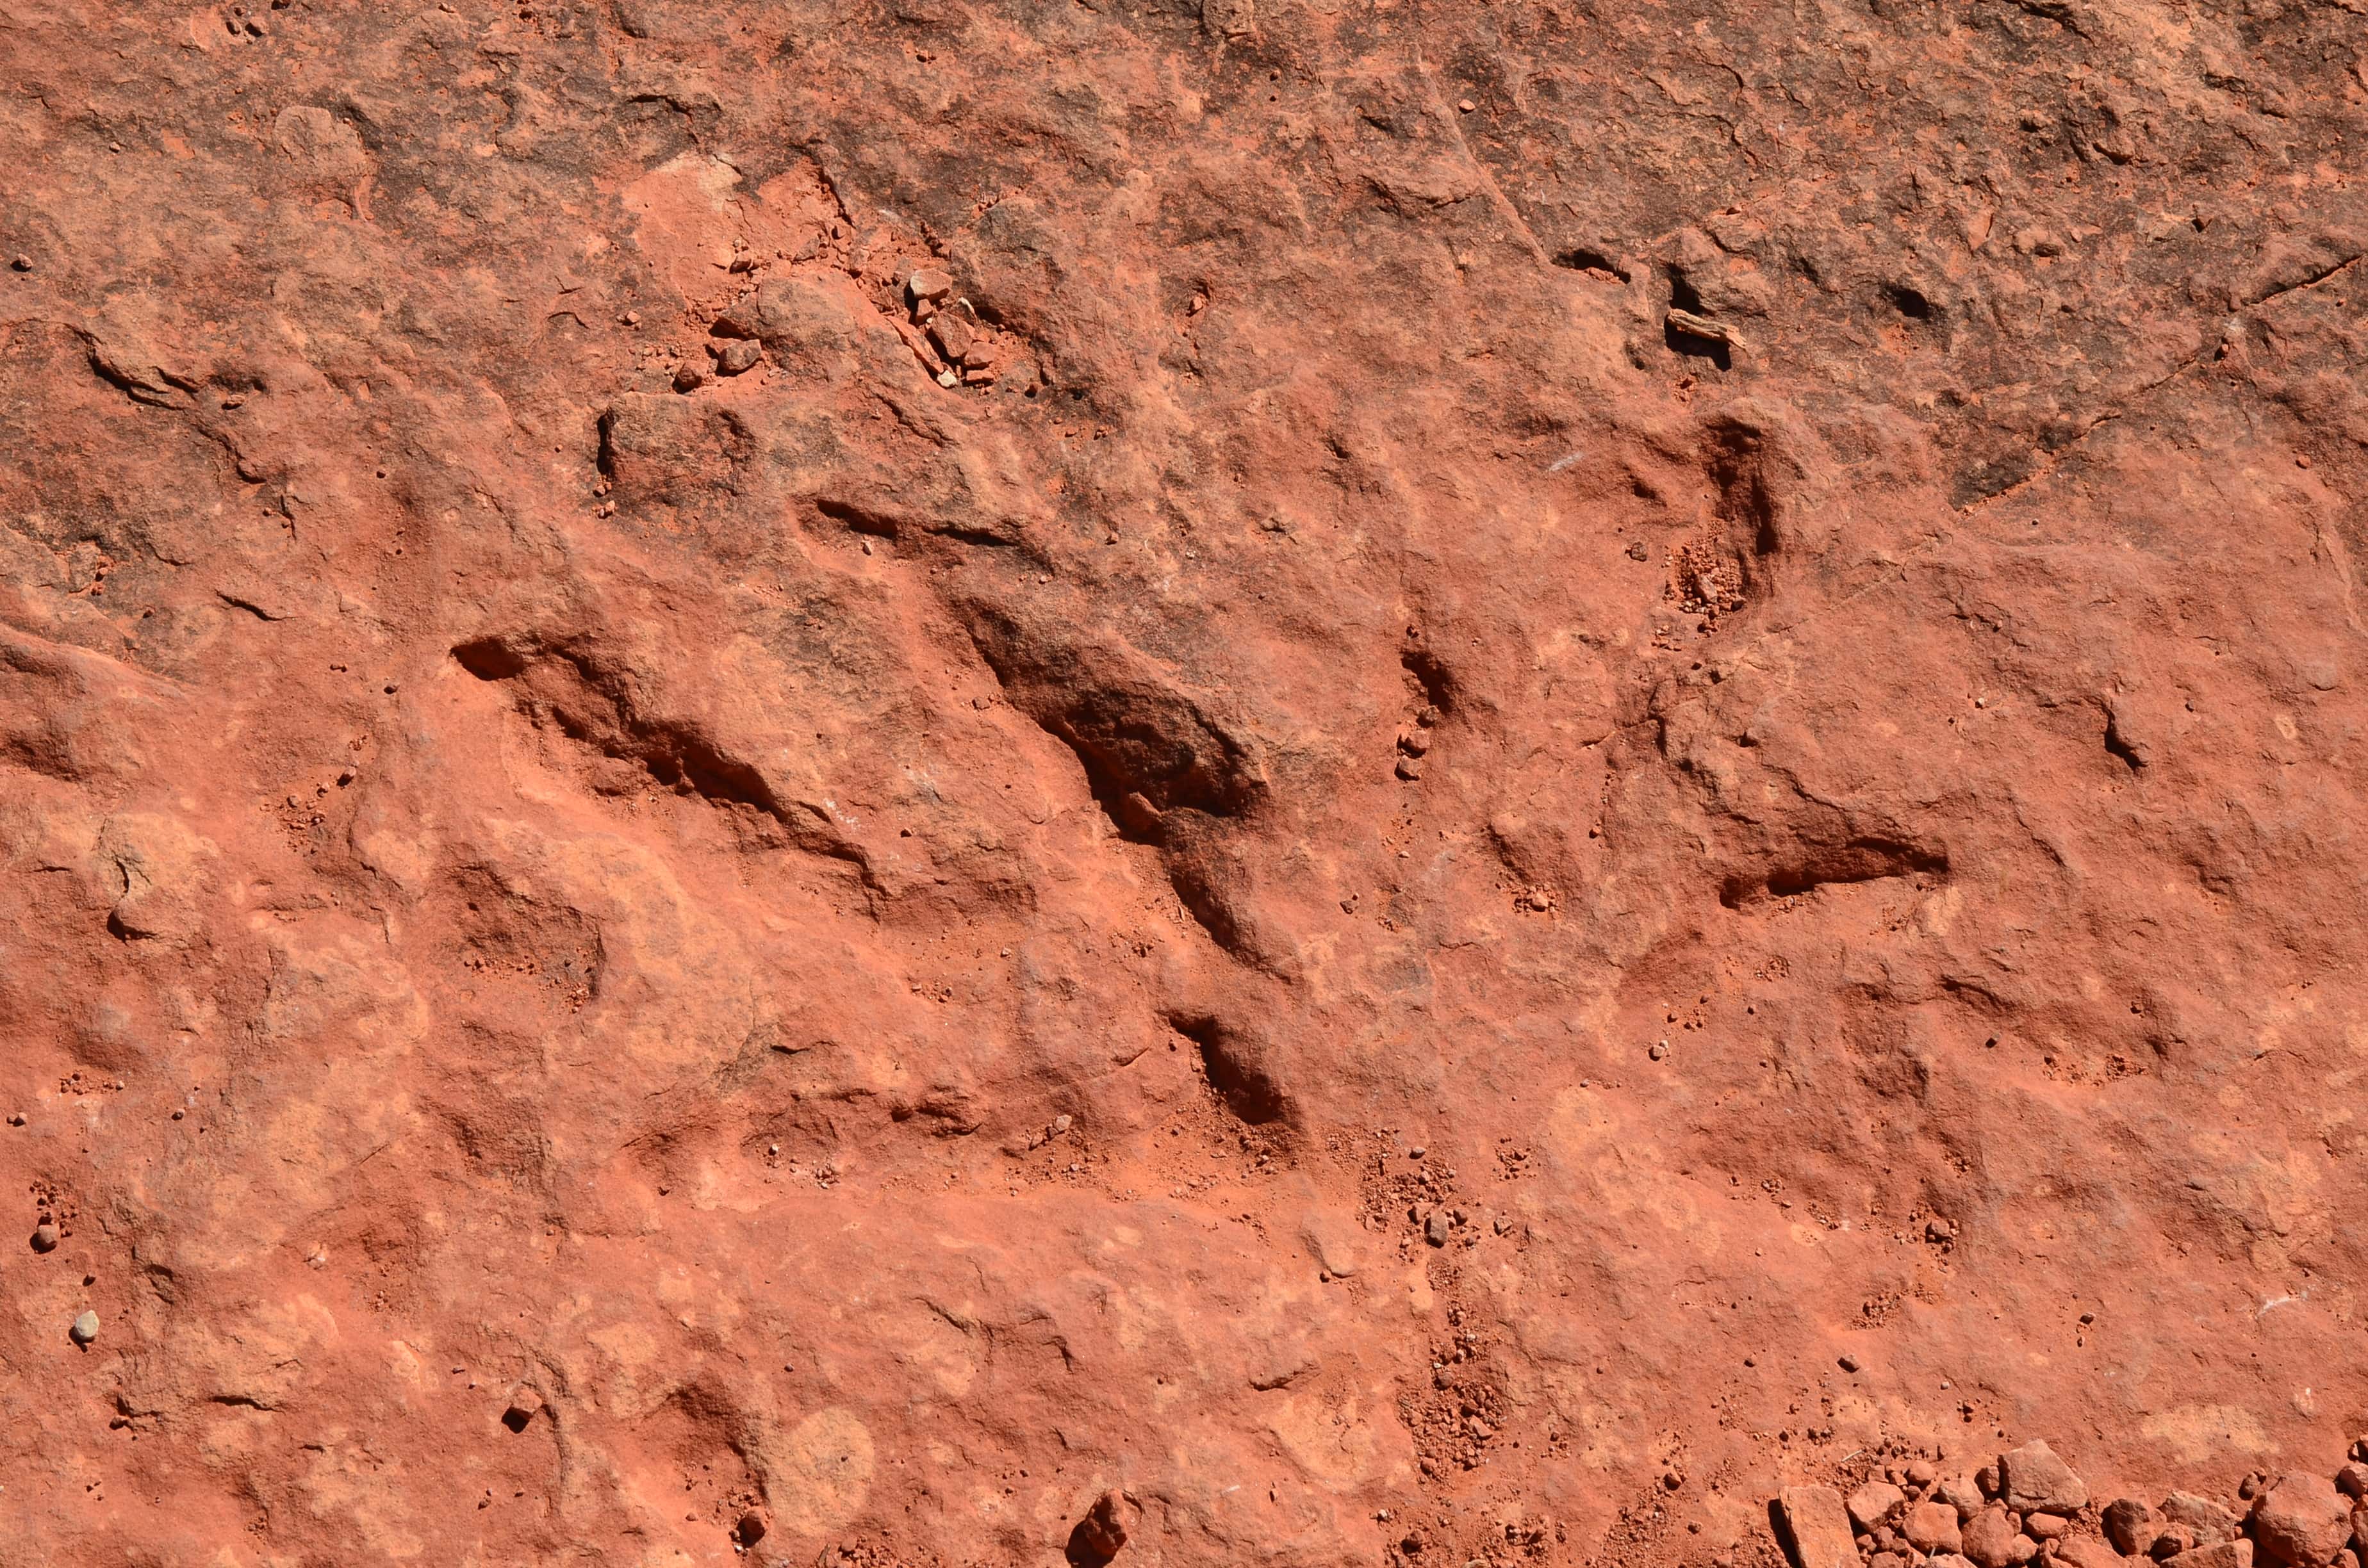 Dinosaur tracks on the Dinosaur Tracks Trail at Red Cliffs Recreation Area in Utah